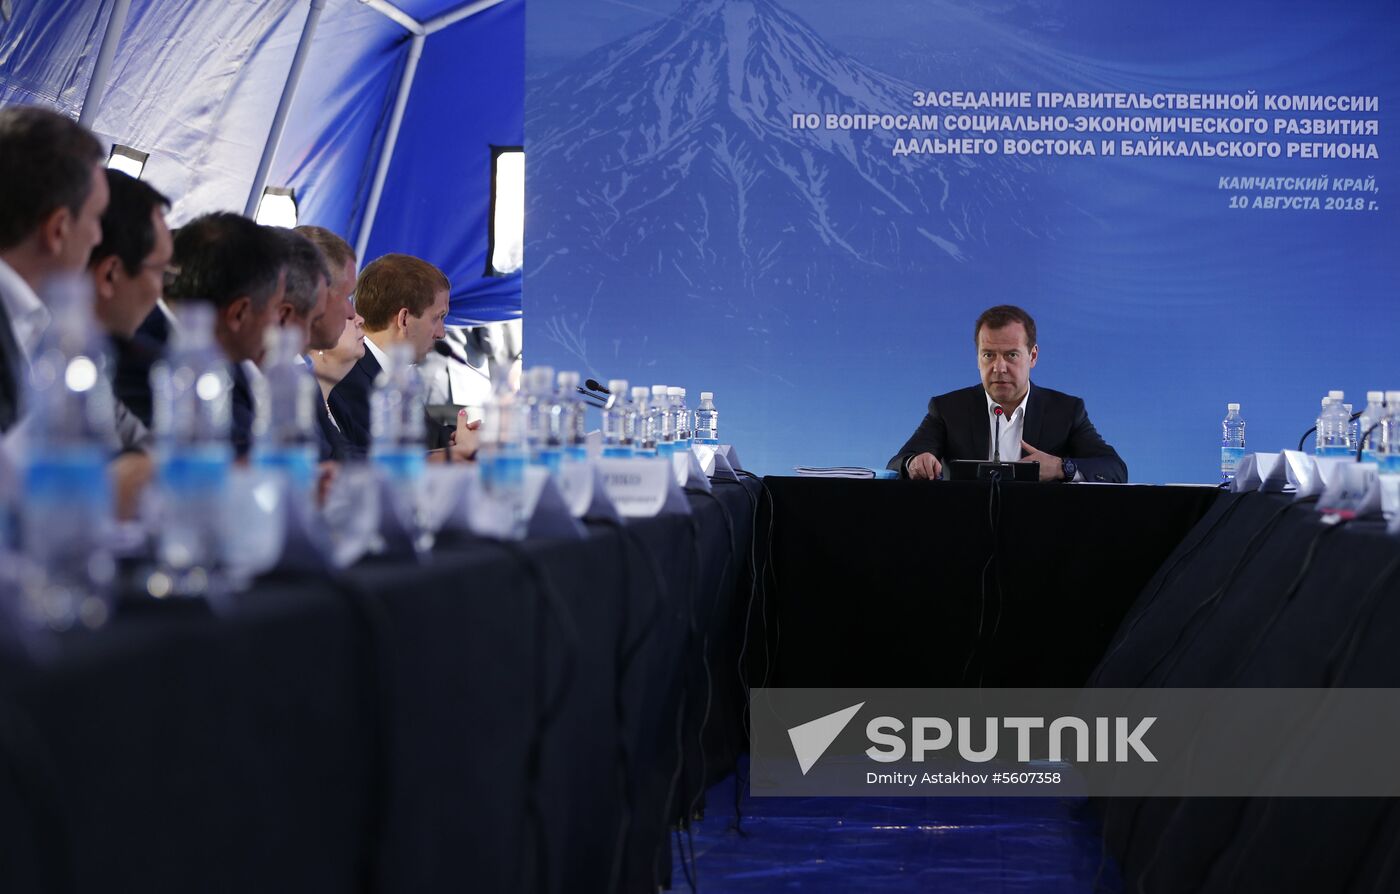 Prime Minister Dmitry Medvedev’s working trip to Kamchatka Territory